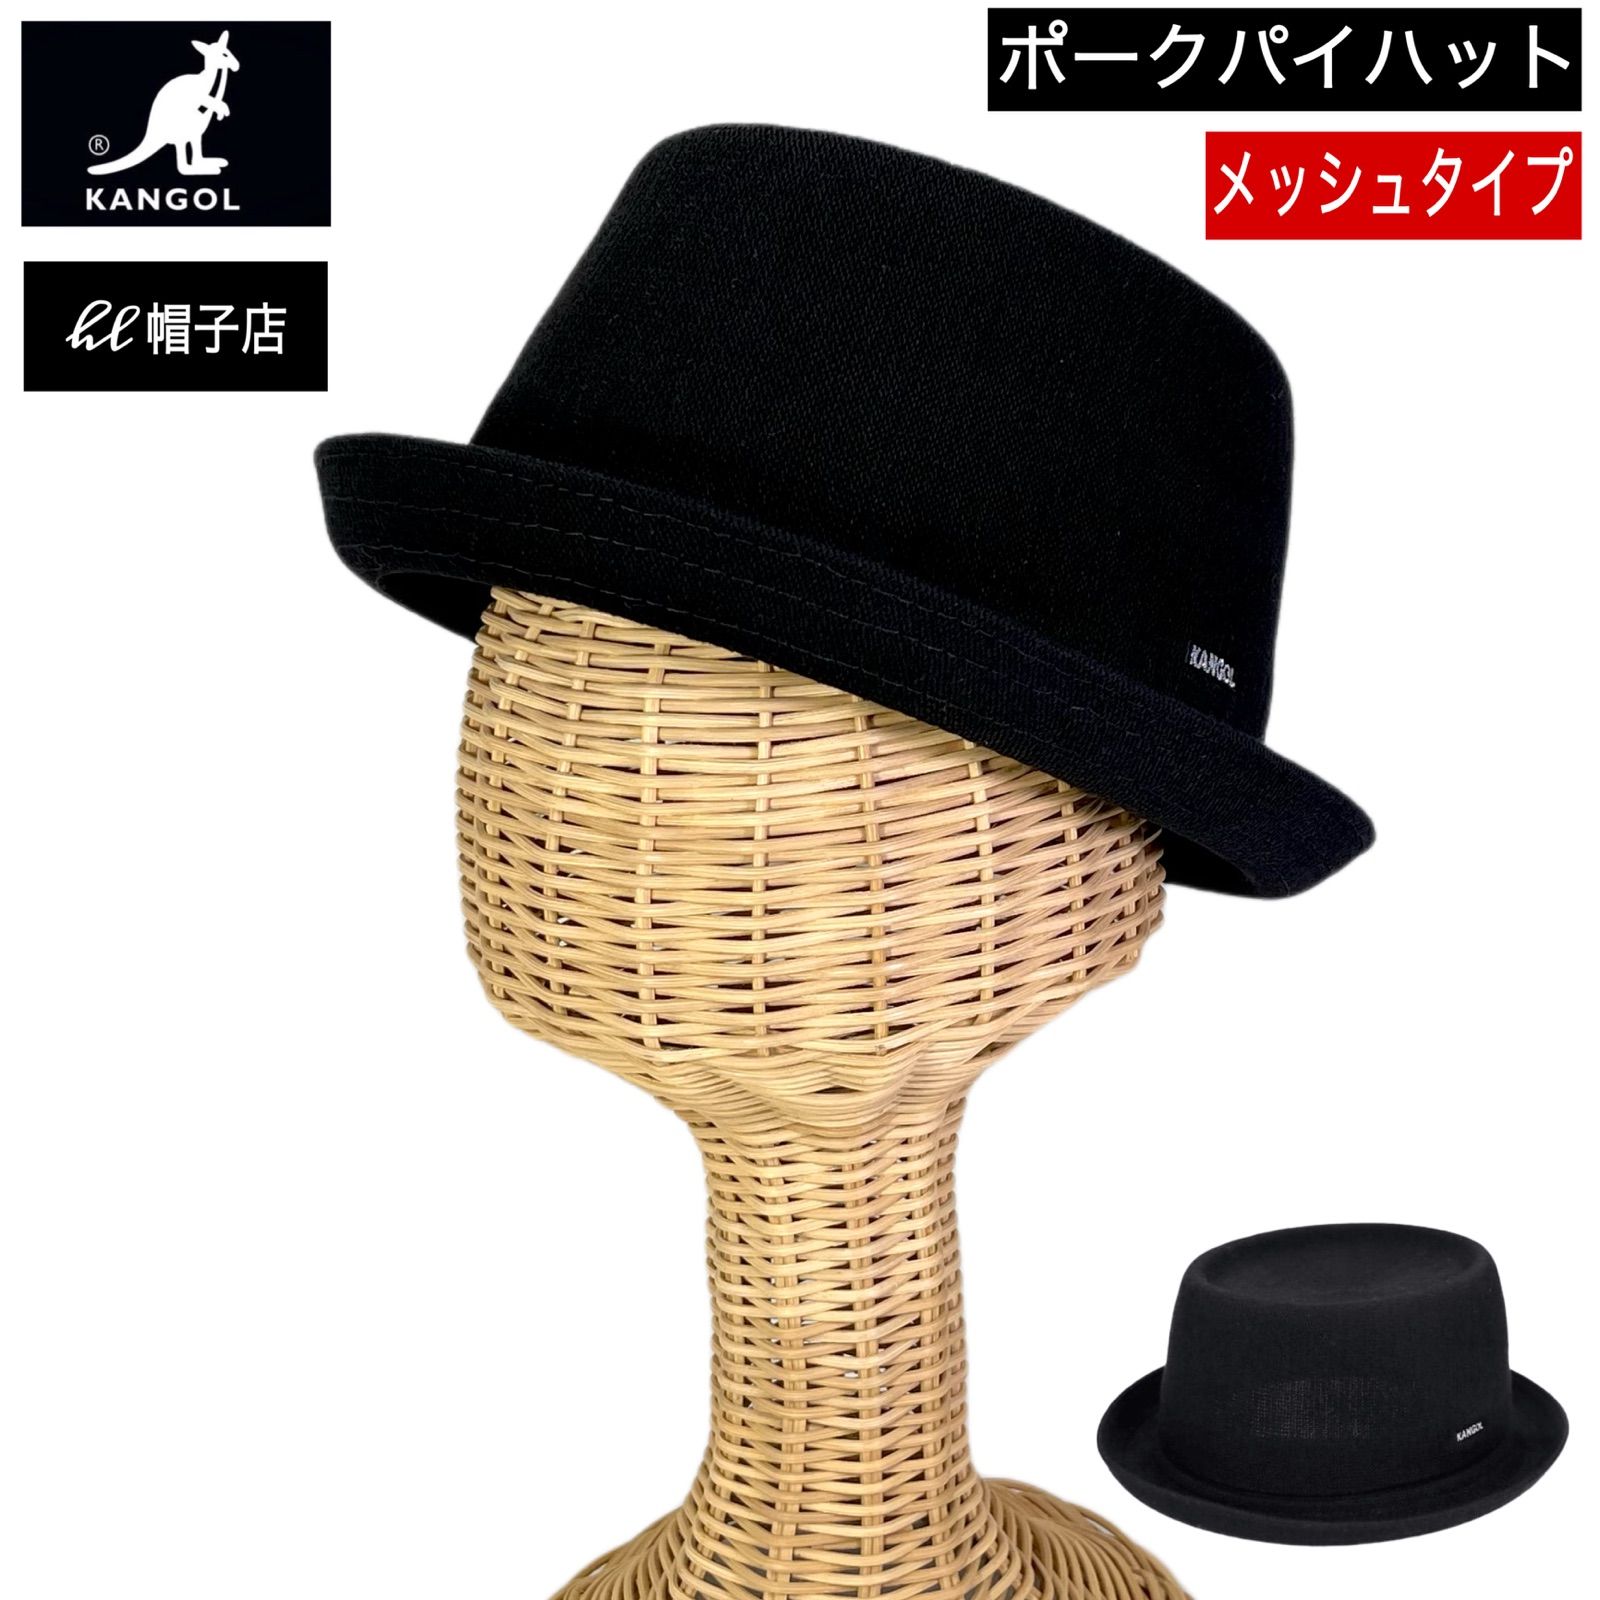 BIGサイズ KANGOL ポークパイハット メッシュ Black XLサイズ - 帽子